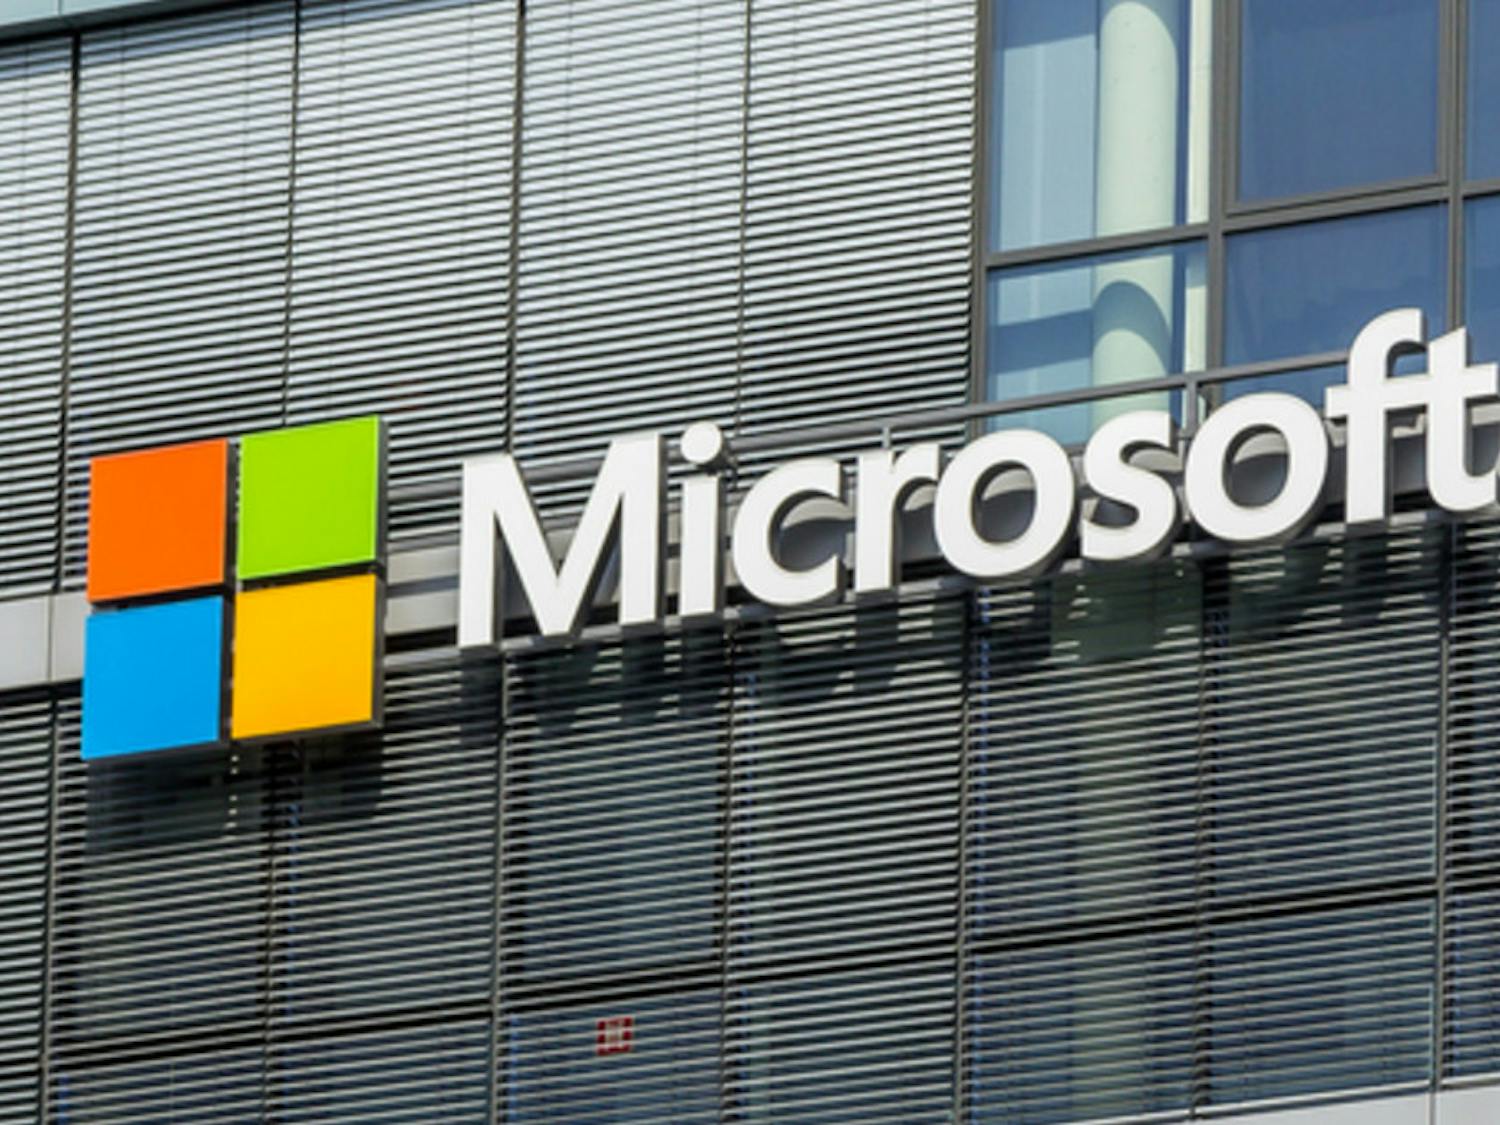 Mount Pleasant Microsoft Mount Pleasant and the new Microsoft data center development